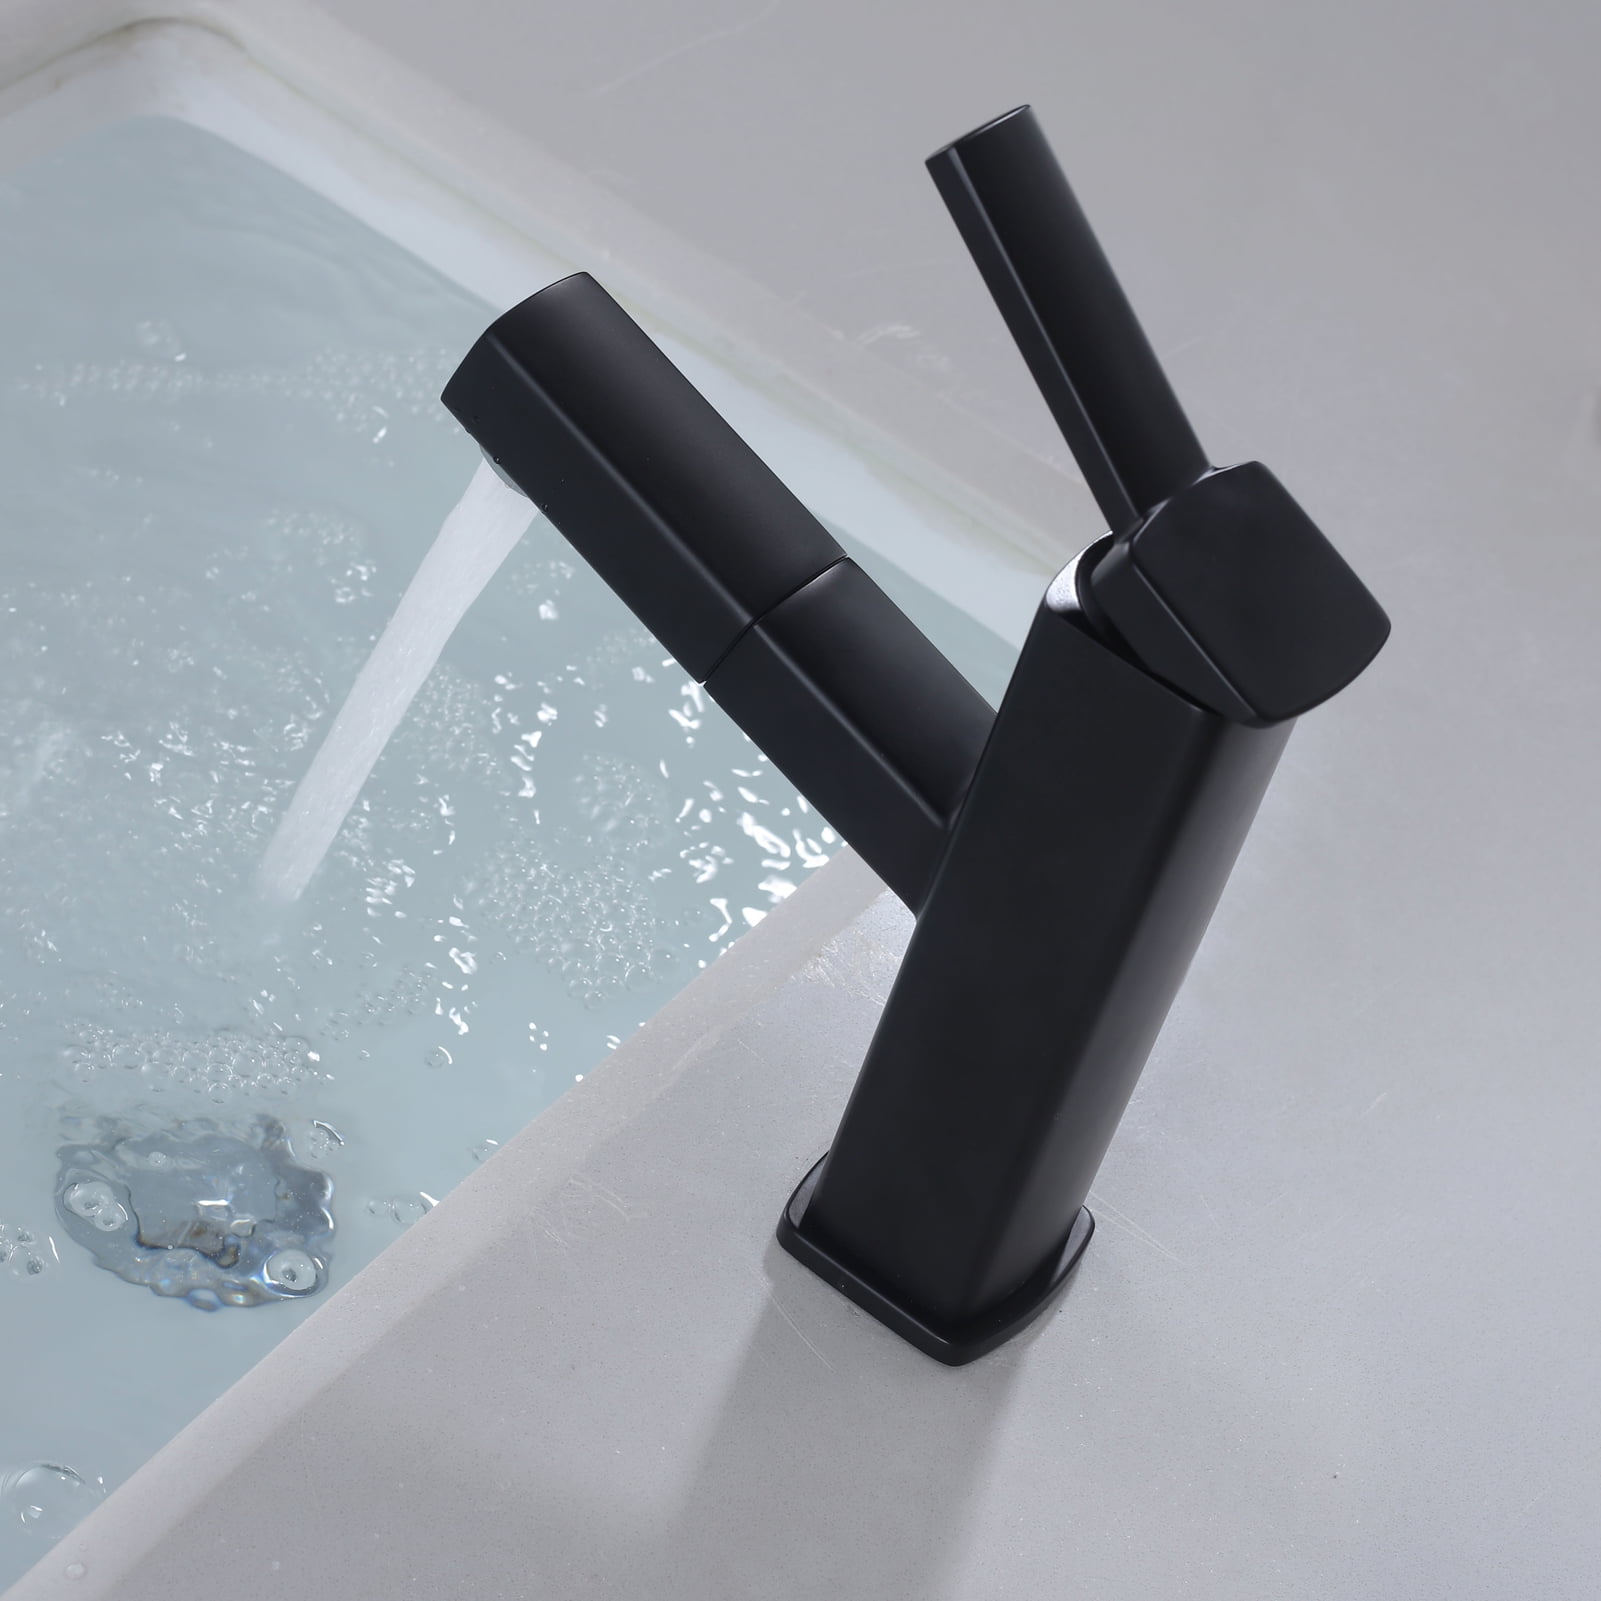 Details about   Modern Swivel ORB Kitchen Basin Sink Faucet Pull Down Steam Bathroom Deck Mount 